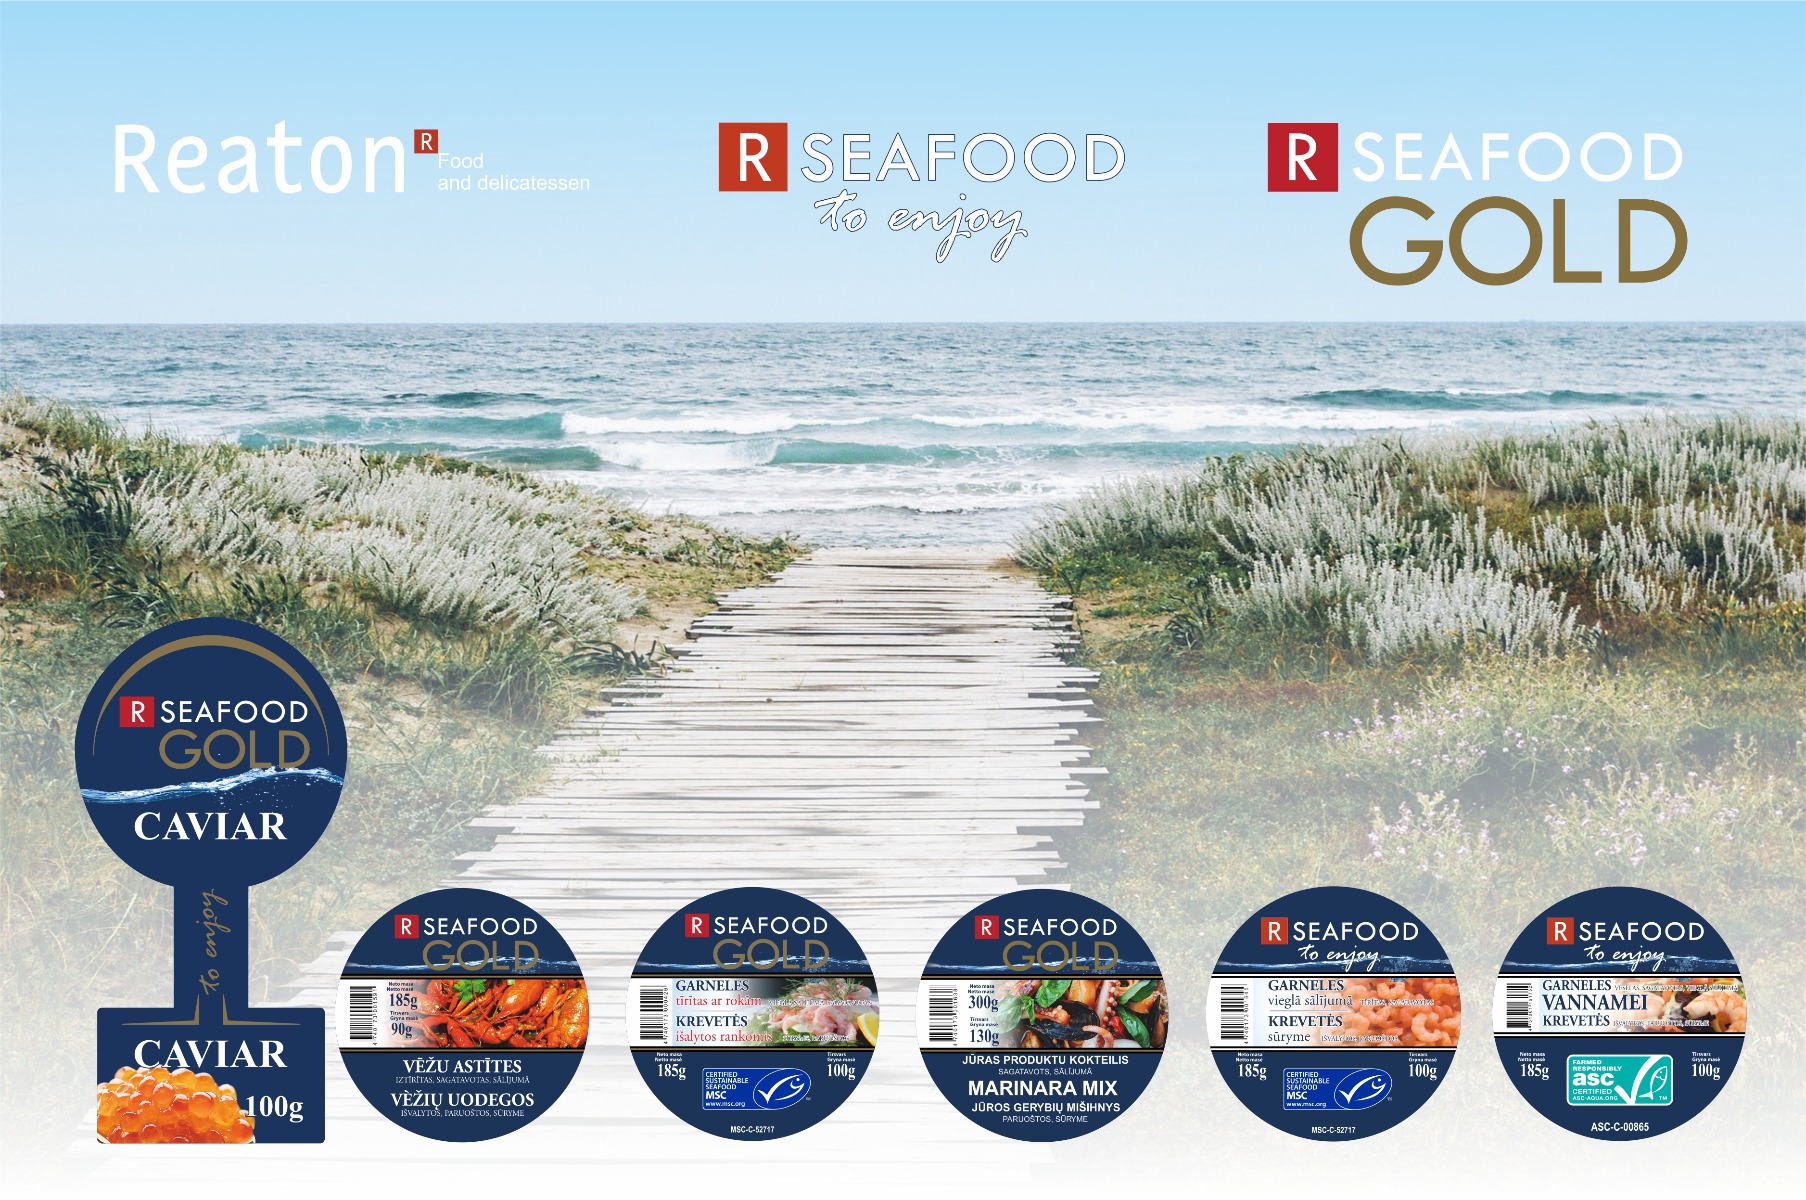 Rseafood Rseafood Gold „Reaton“ prekės ženklas